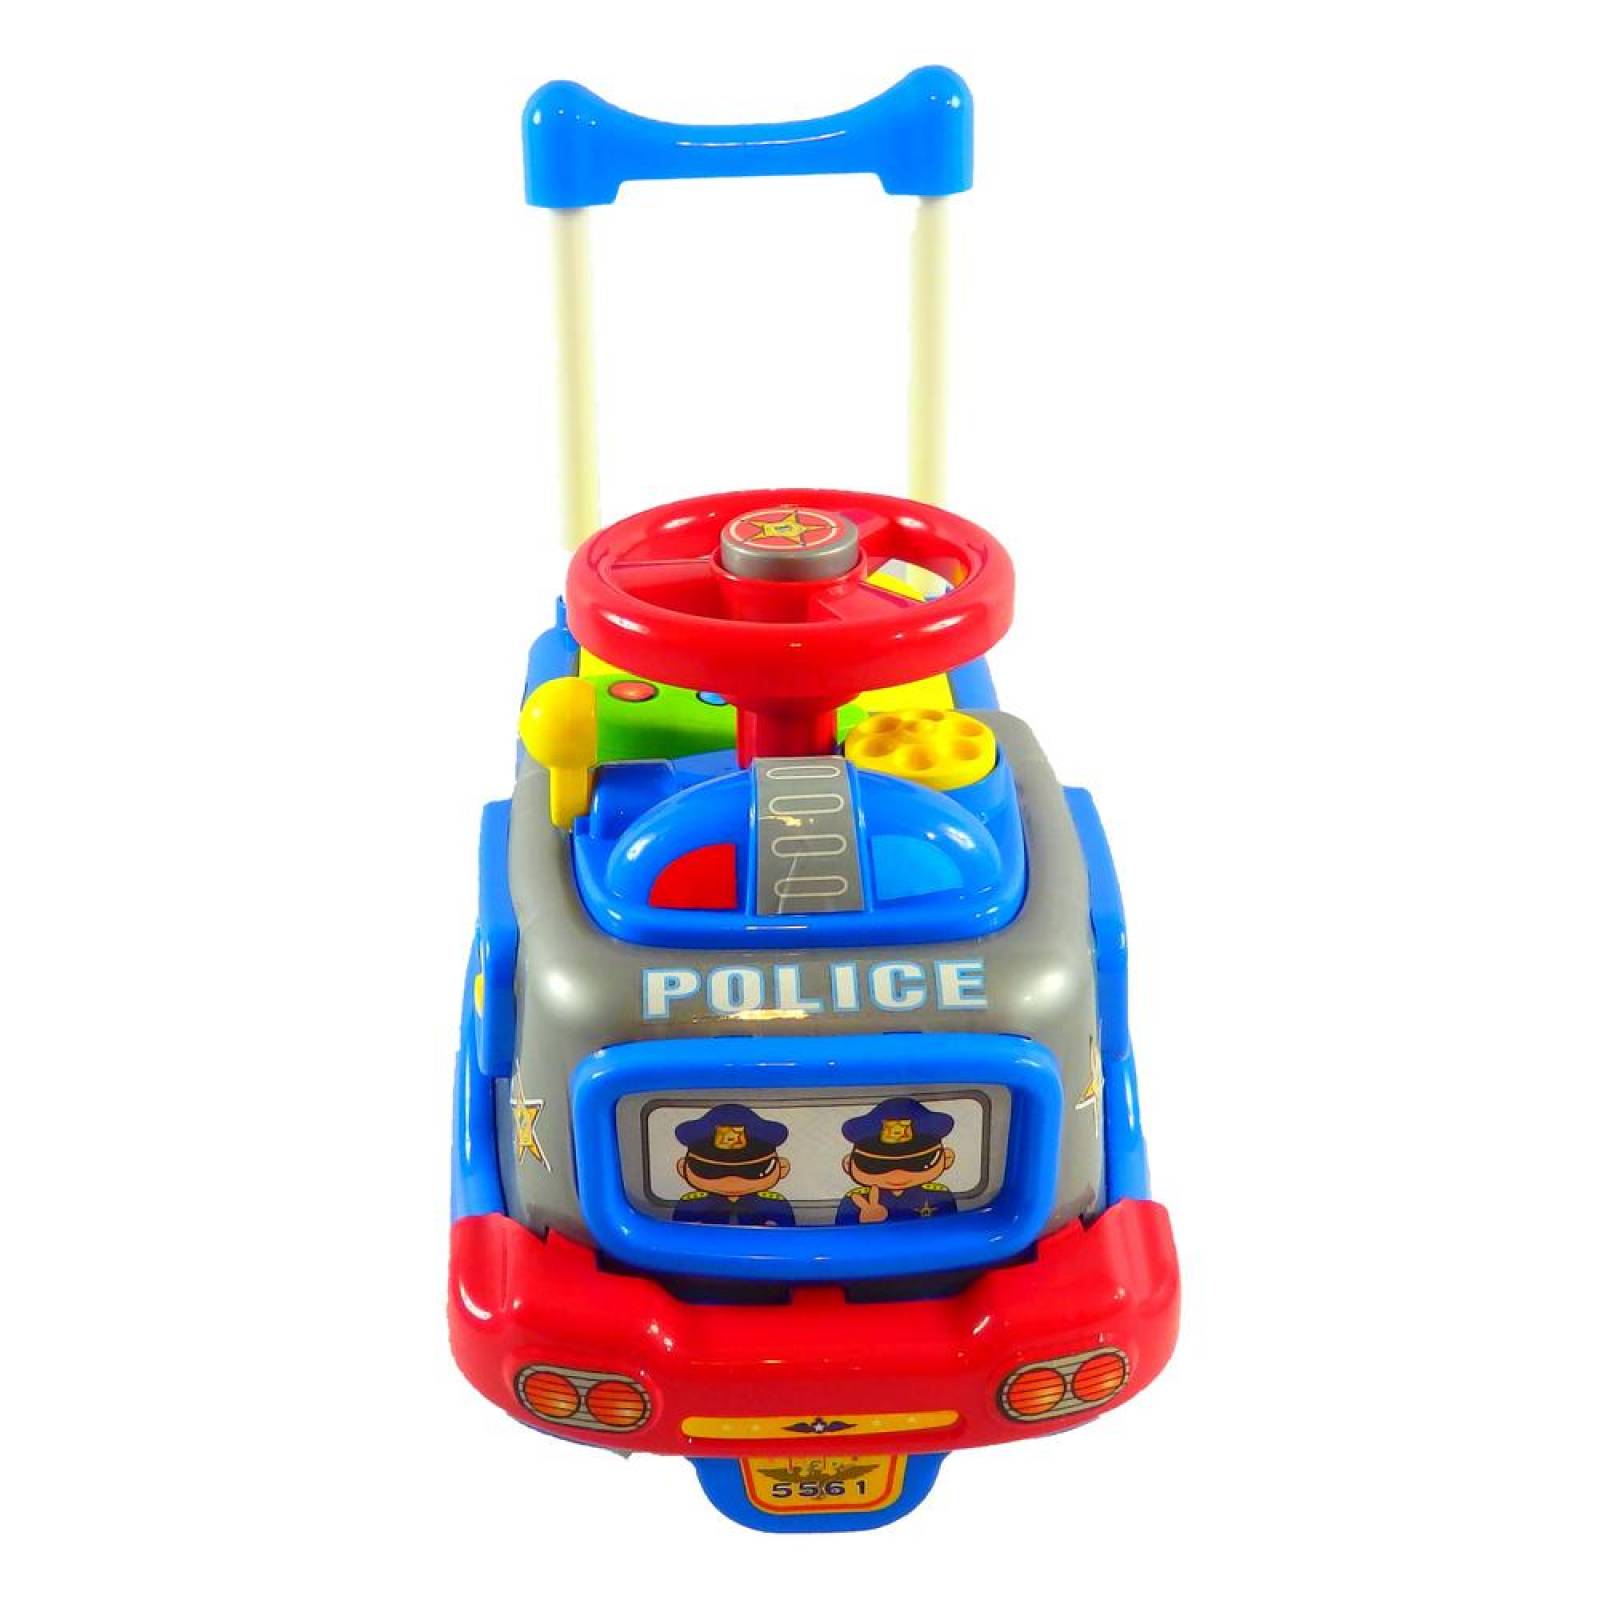 Montable Correpasillos de Policia con sonido  - Azul